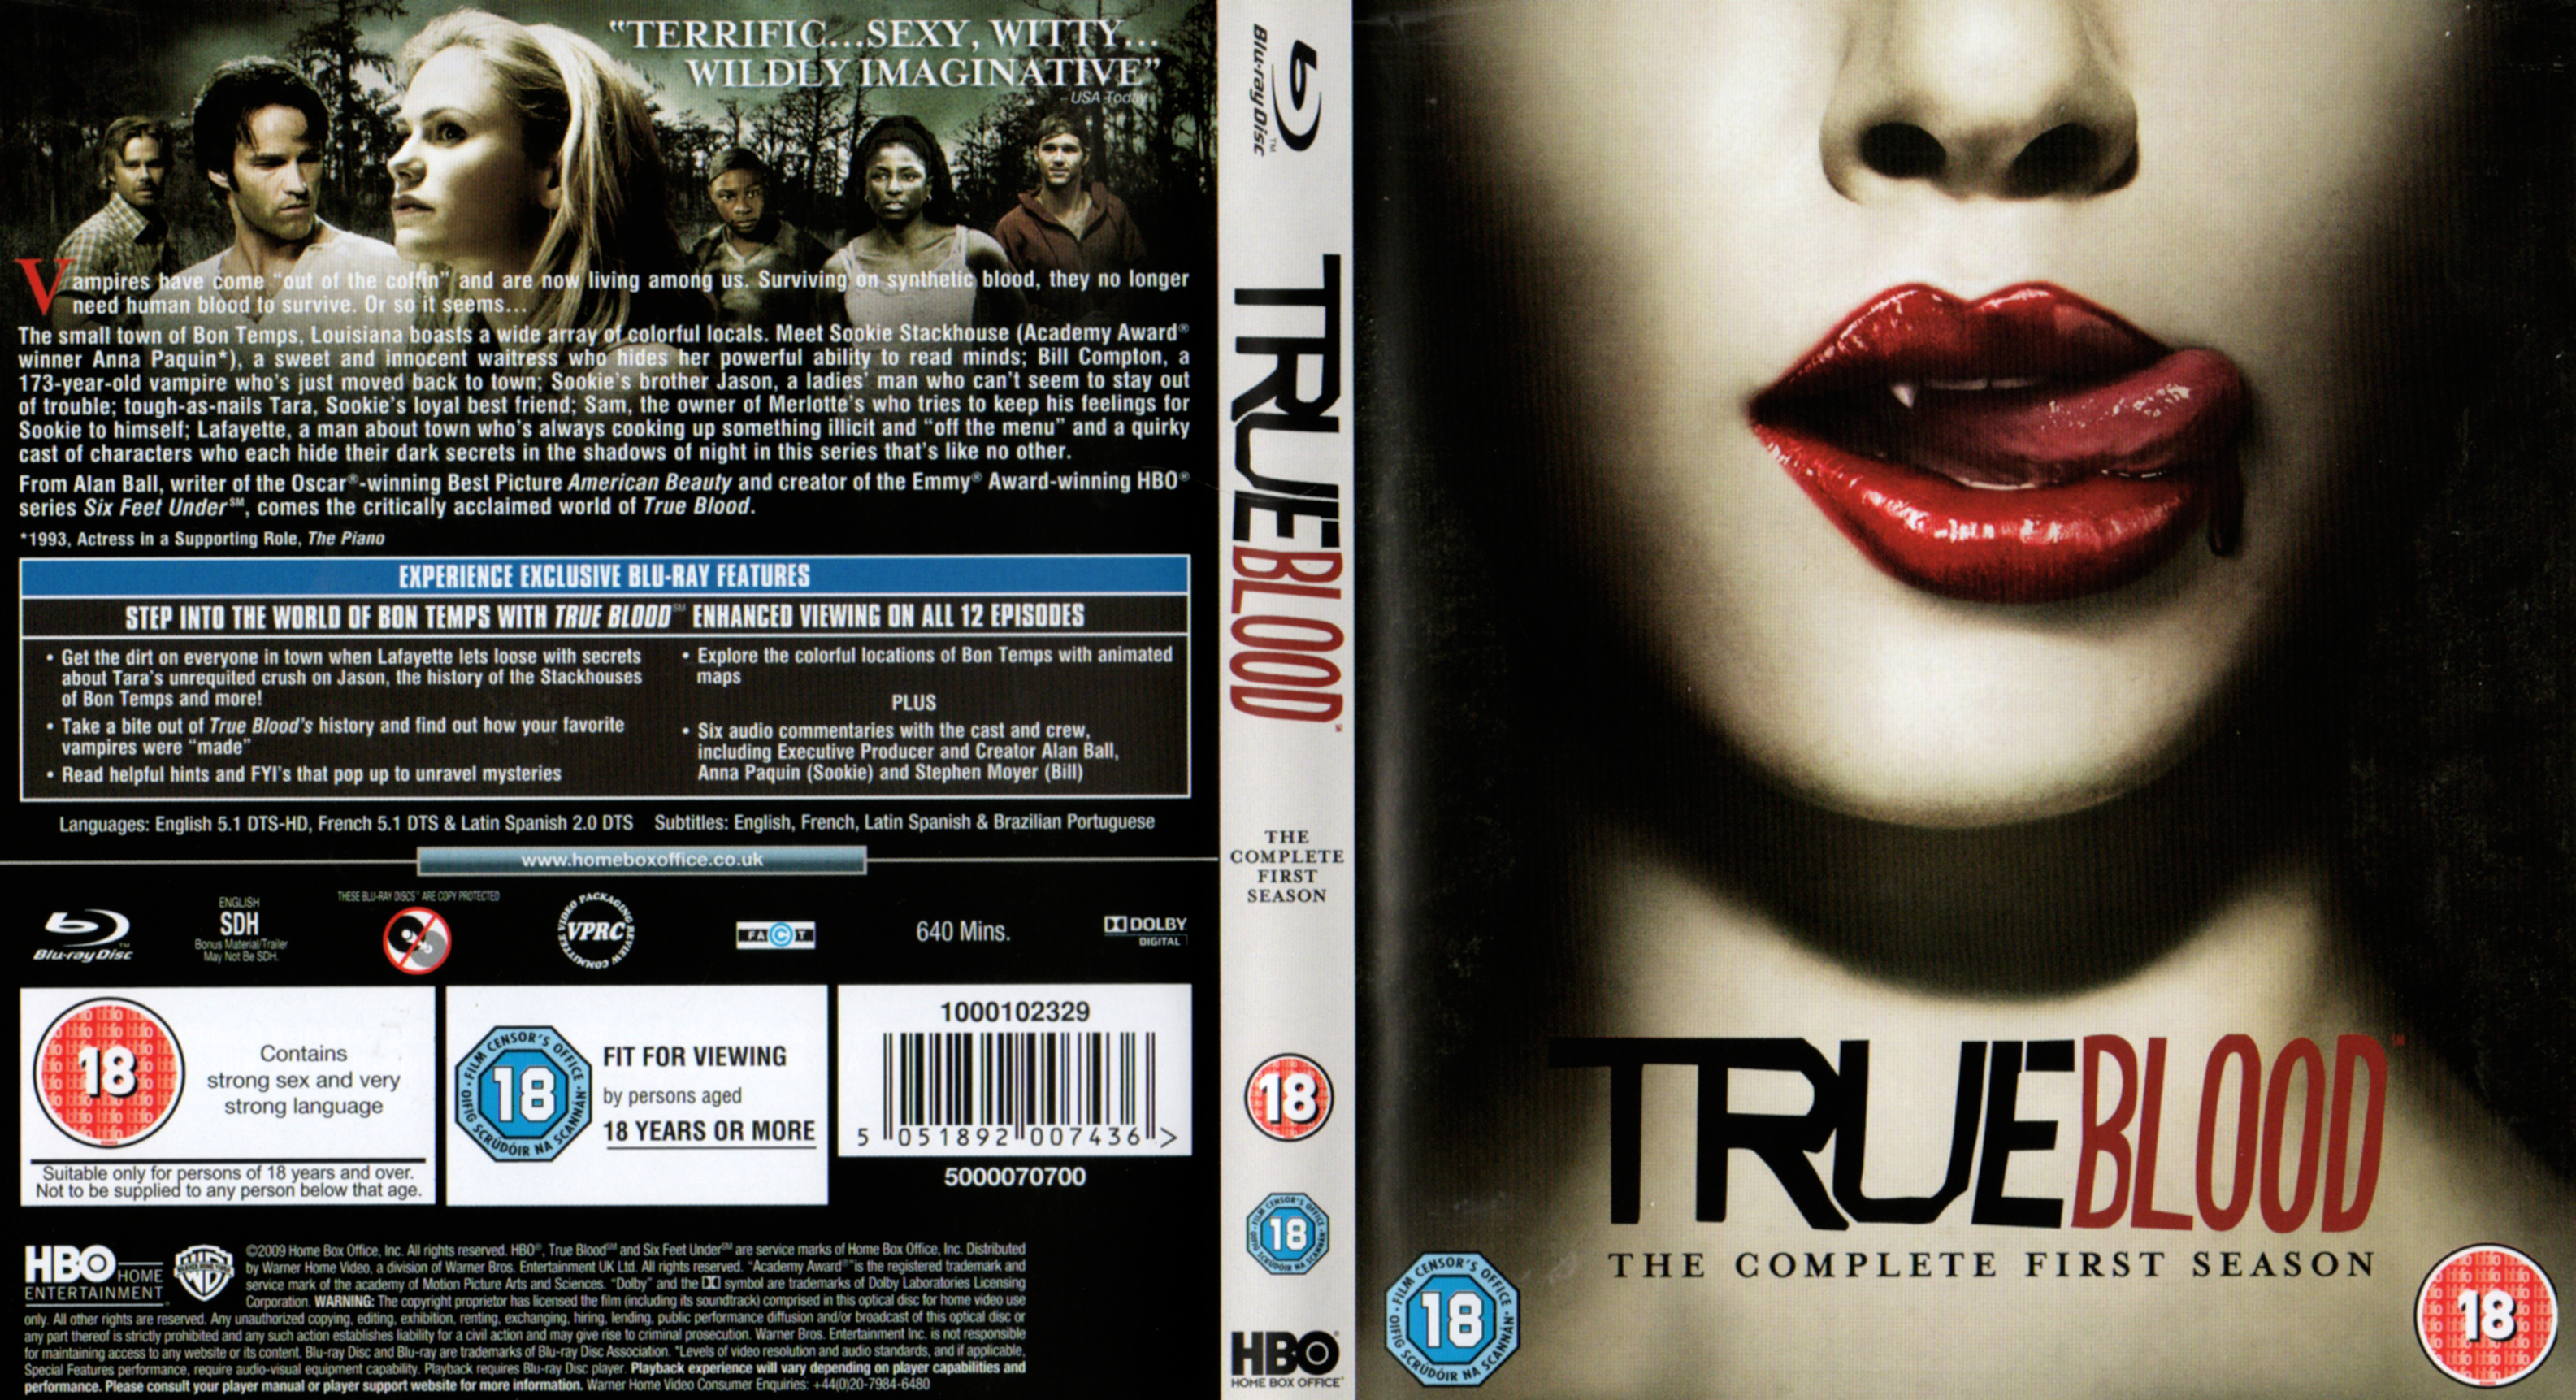 Jaquette DVD True blood saison 1 Zone 1 (BLU-RAY)